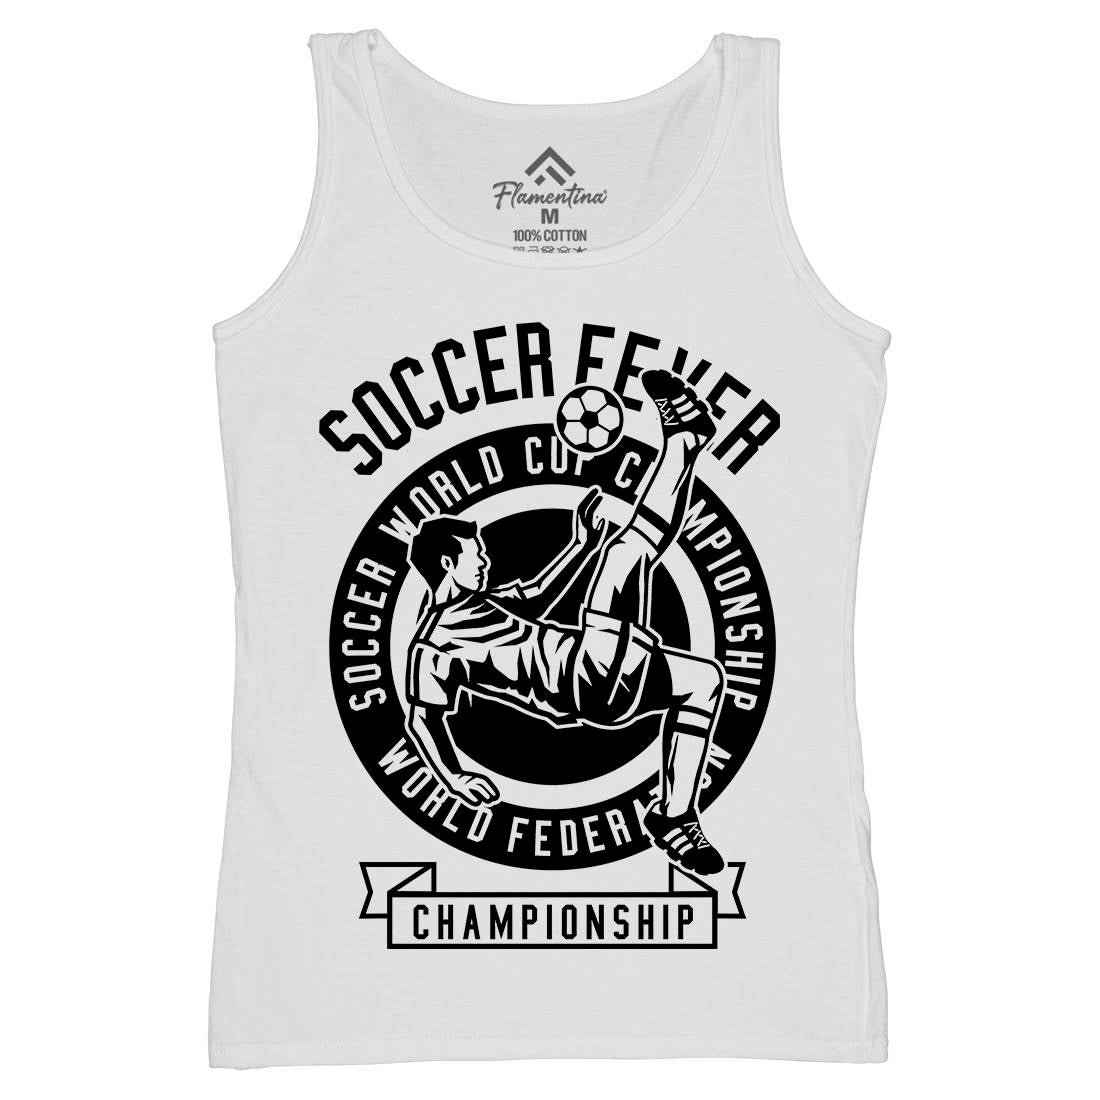 Soccer Fever Womens Organic Tank Top Vest Sport B634